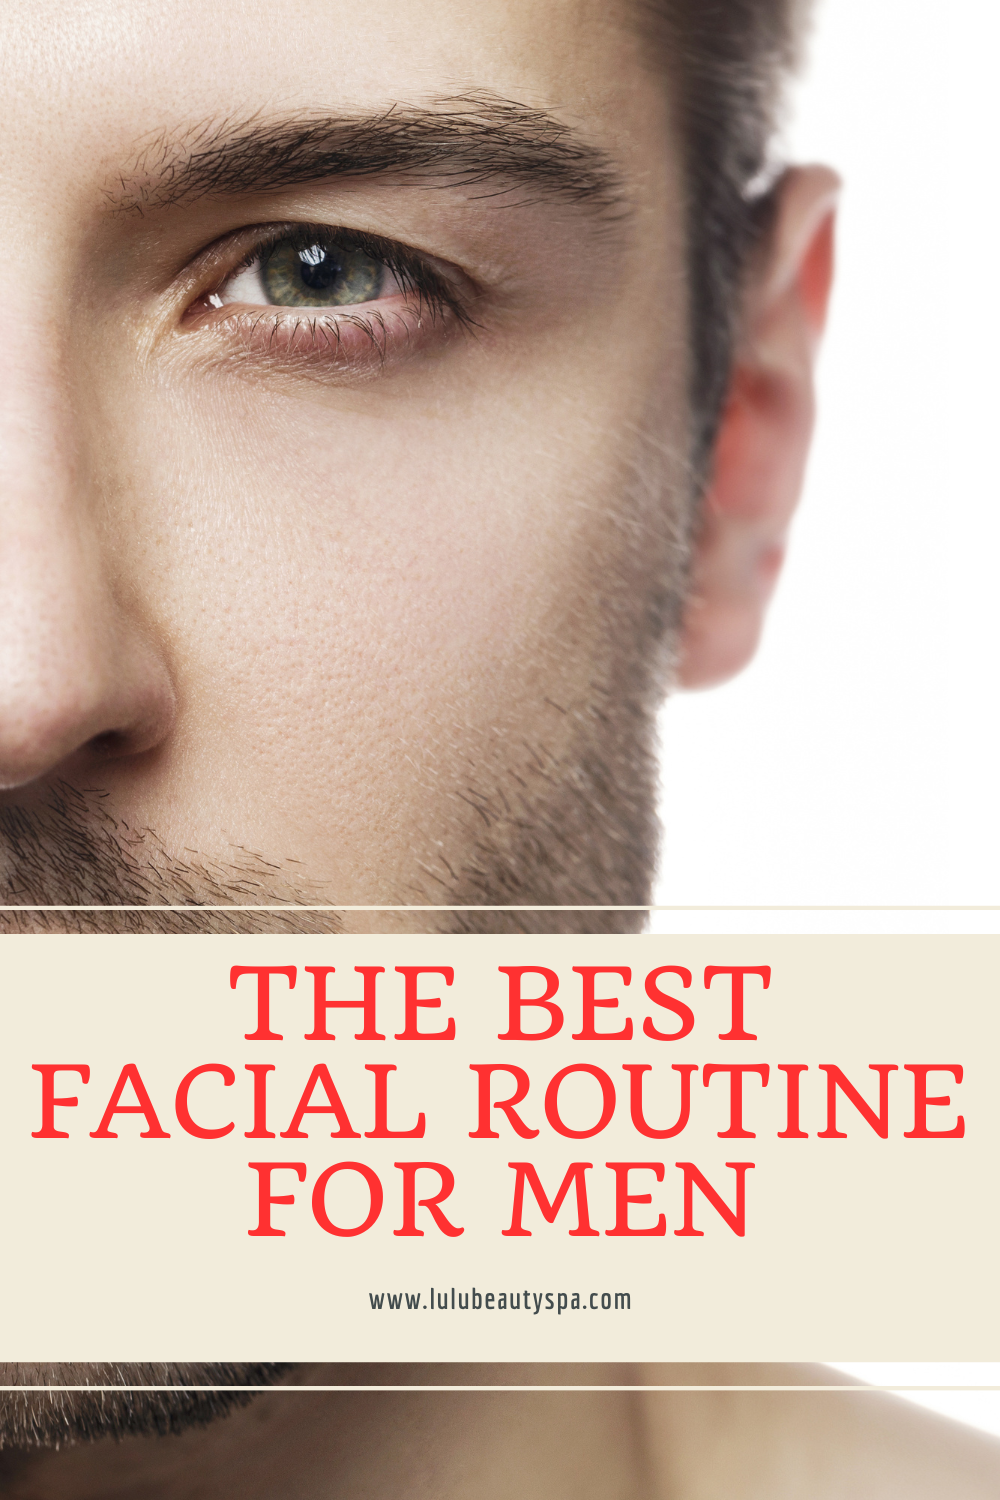 Best Facial Routine for Men